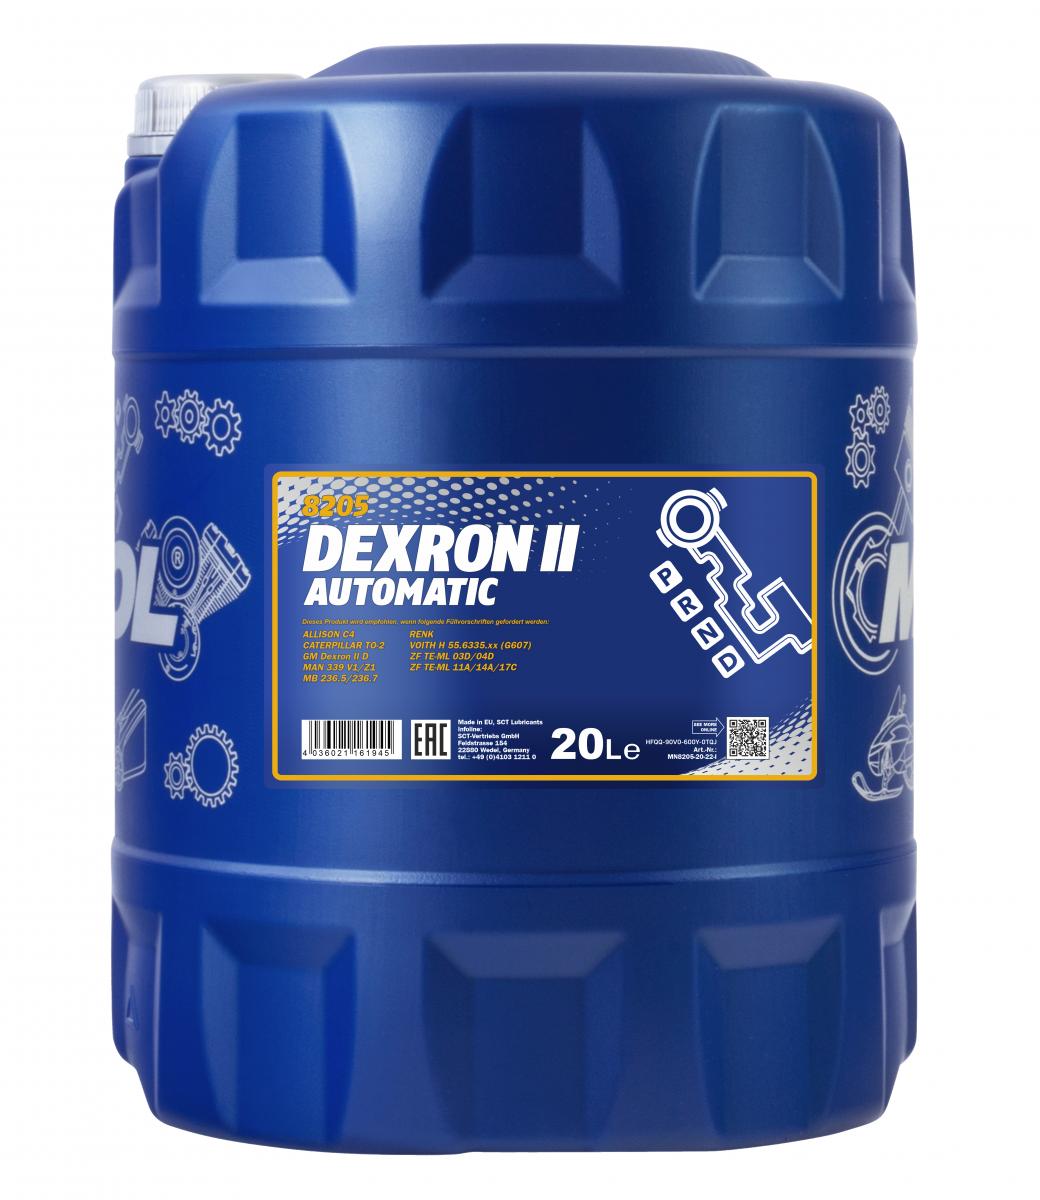 60 Liter MANNOL Dexron II Automatic Getriebeöl Automatikgetriebe Öl